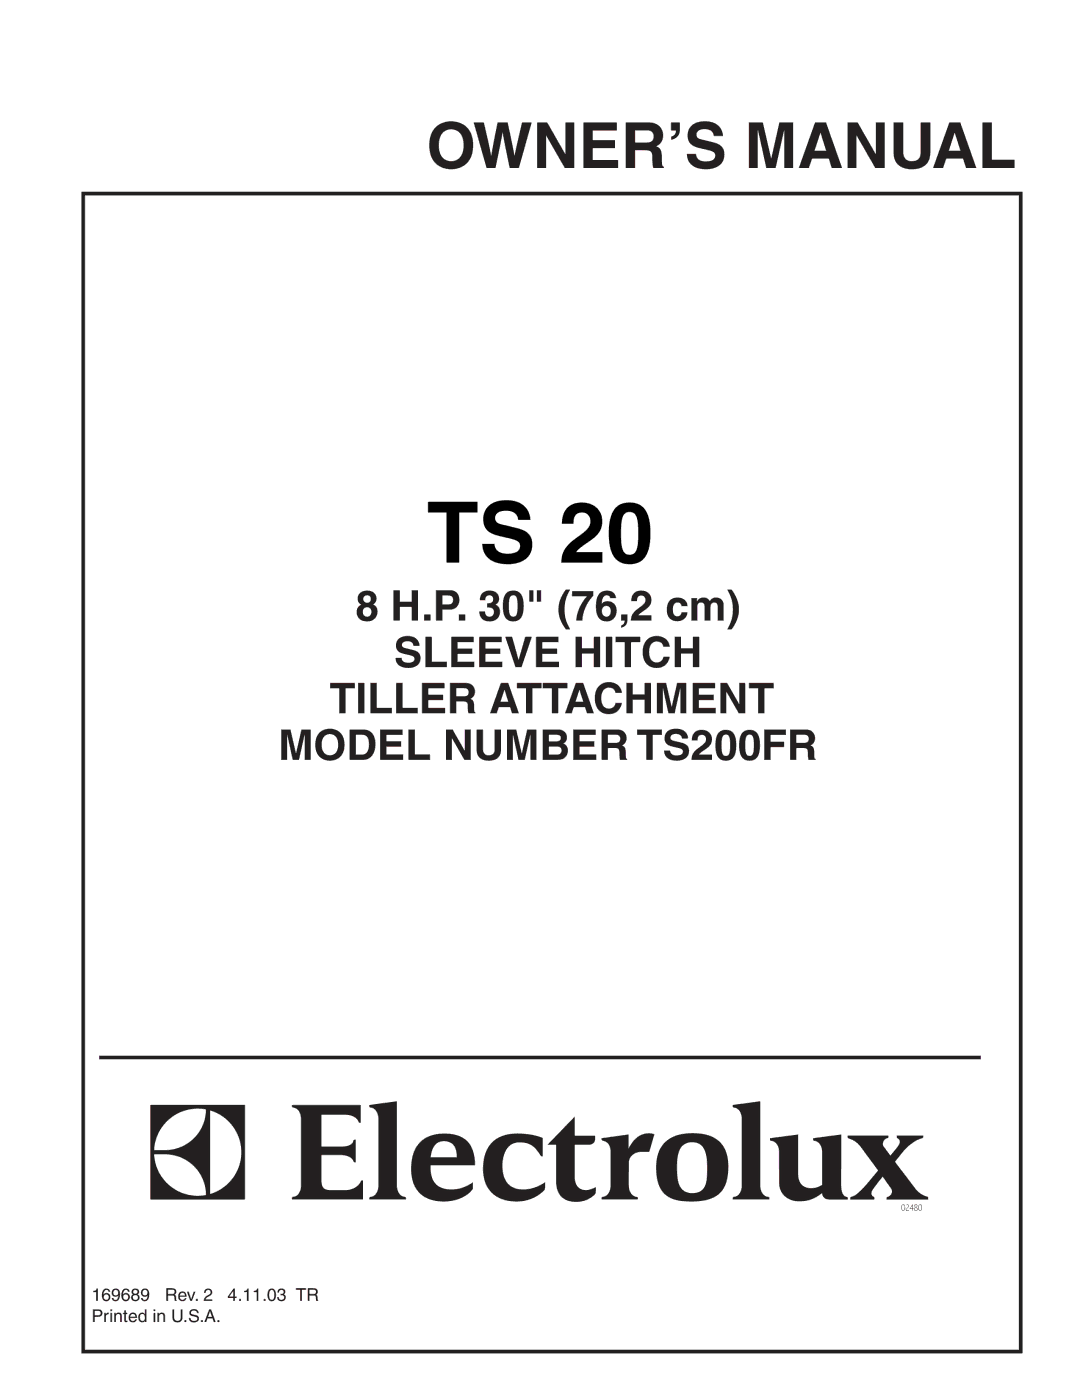 Husqvarna owner manual Sleeve Hitch Tiller Attachment Model Number TS200FR 